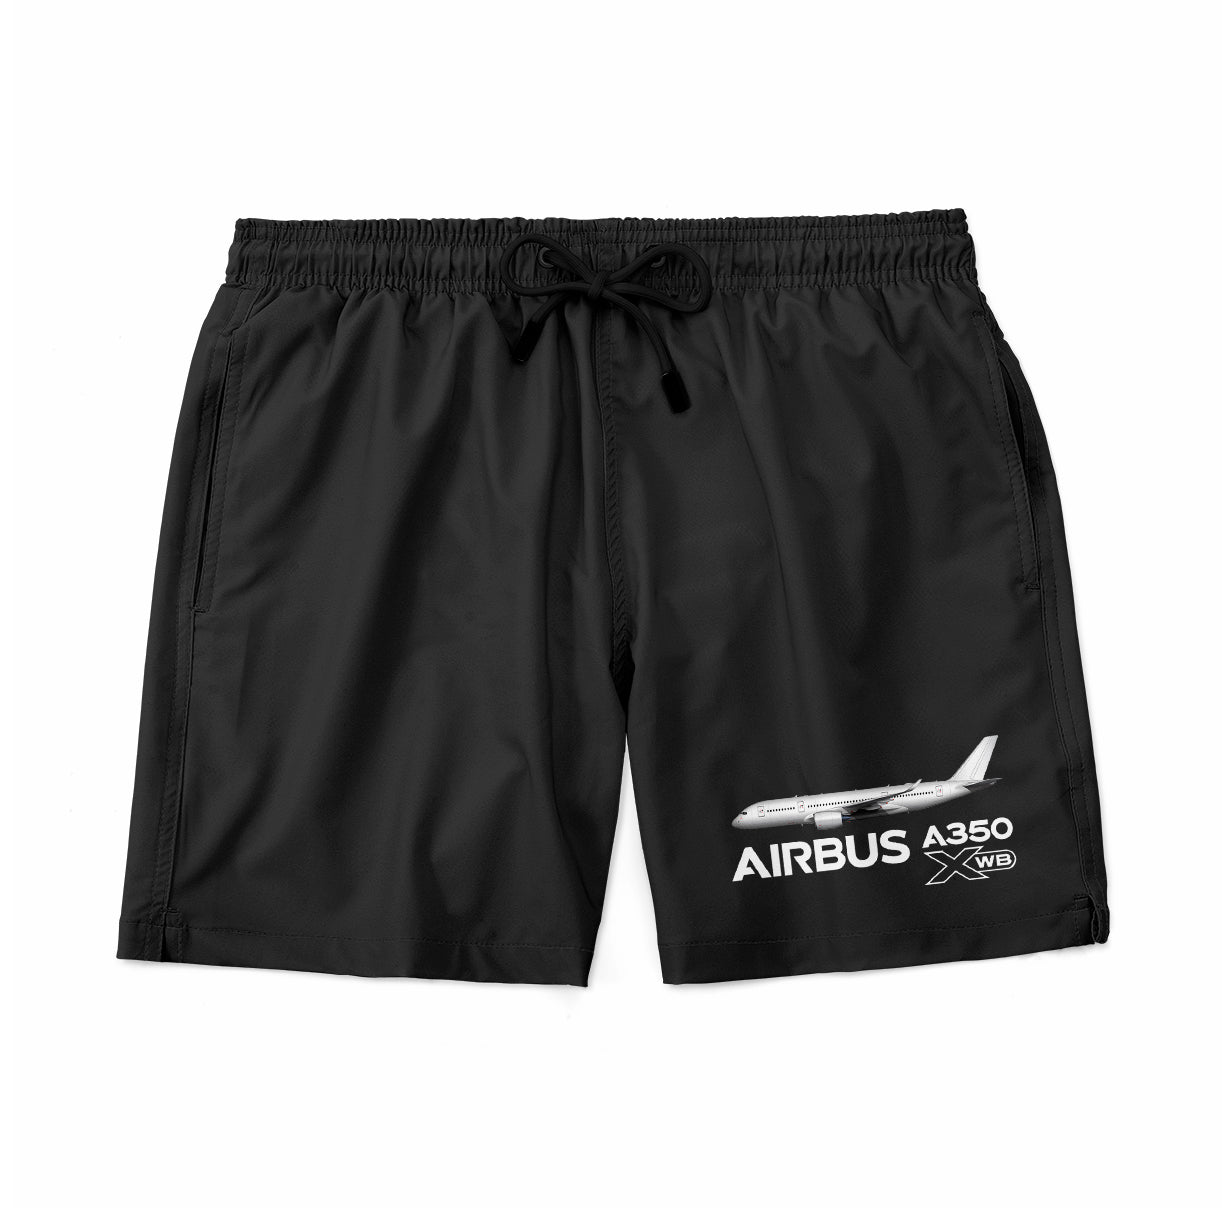 The Airbus A350 WXB Designed Swim Trunks & Shorts